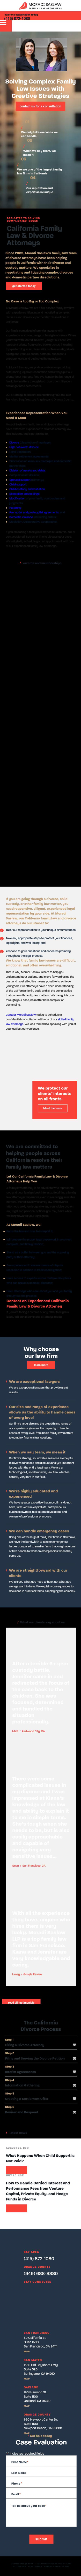 Moradi Saslaw LLP - San Mateo CA Lawyers